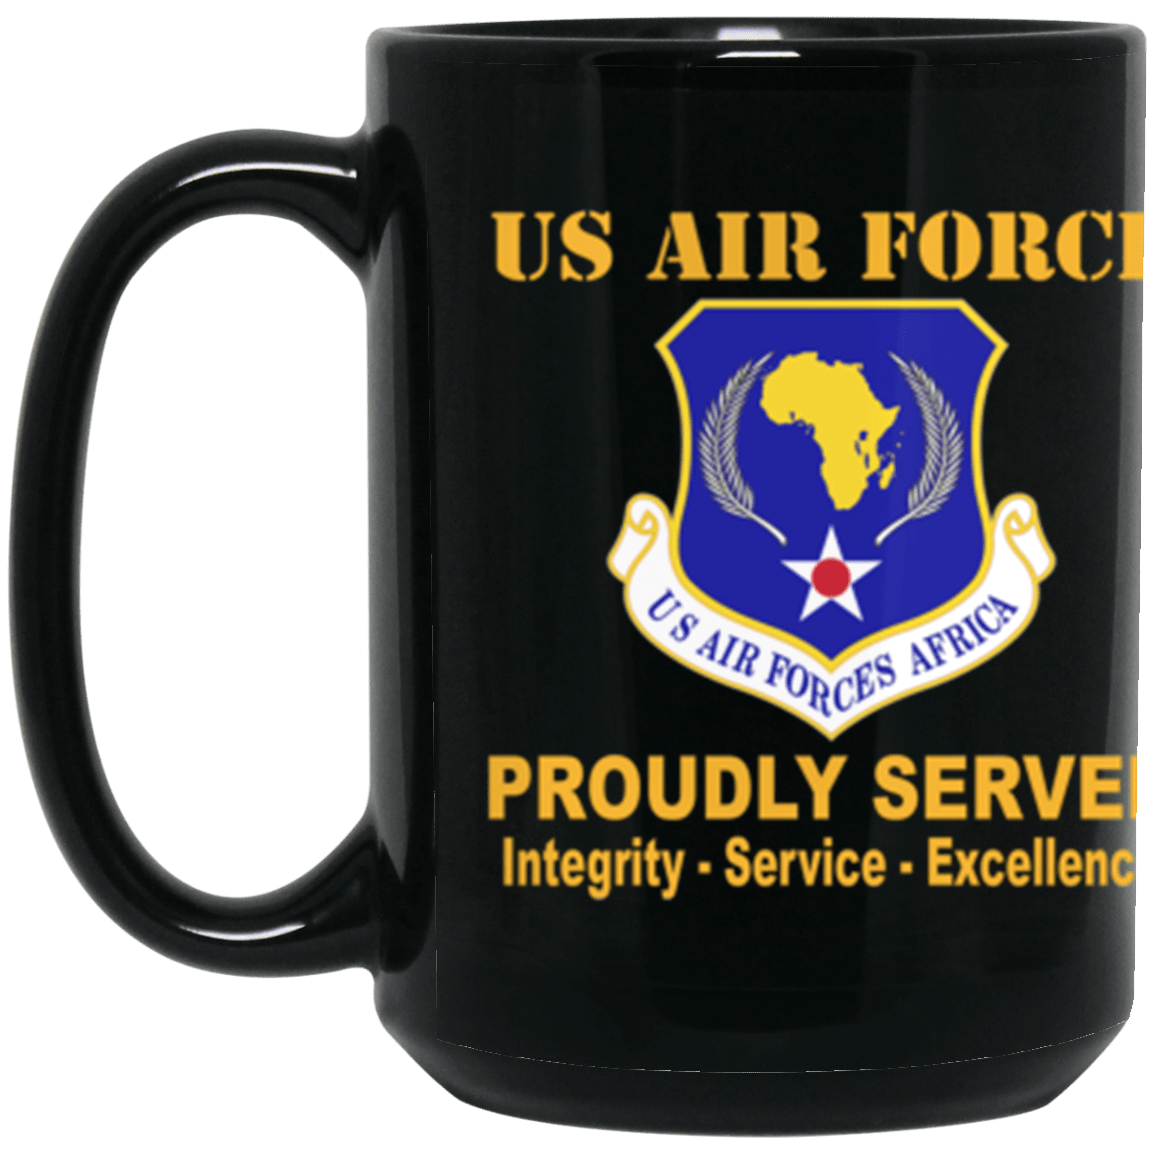 US Air Force Air National Guard Proudly Served Core Values 15 oz. Black Mug-Mug-USAF-Veterans Nation